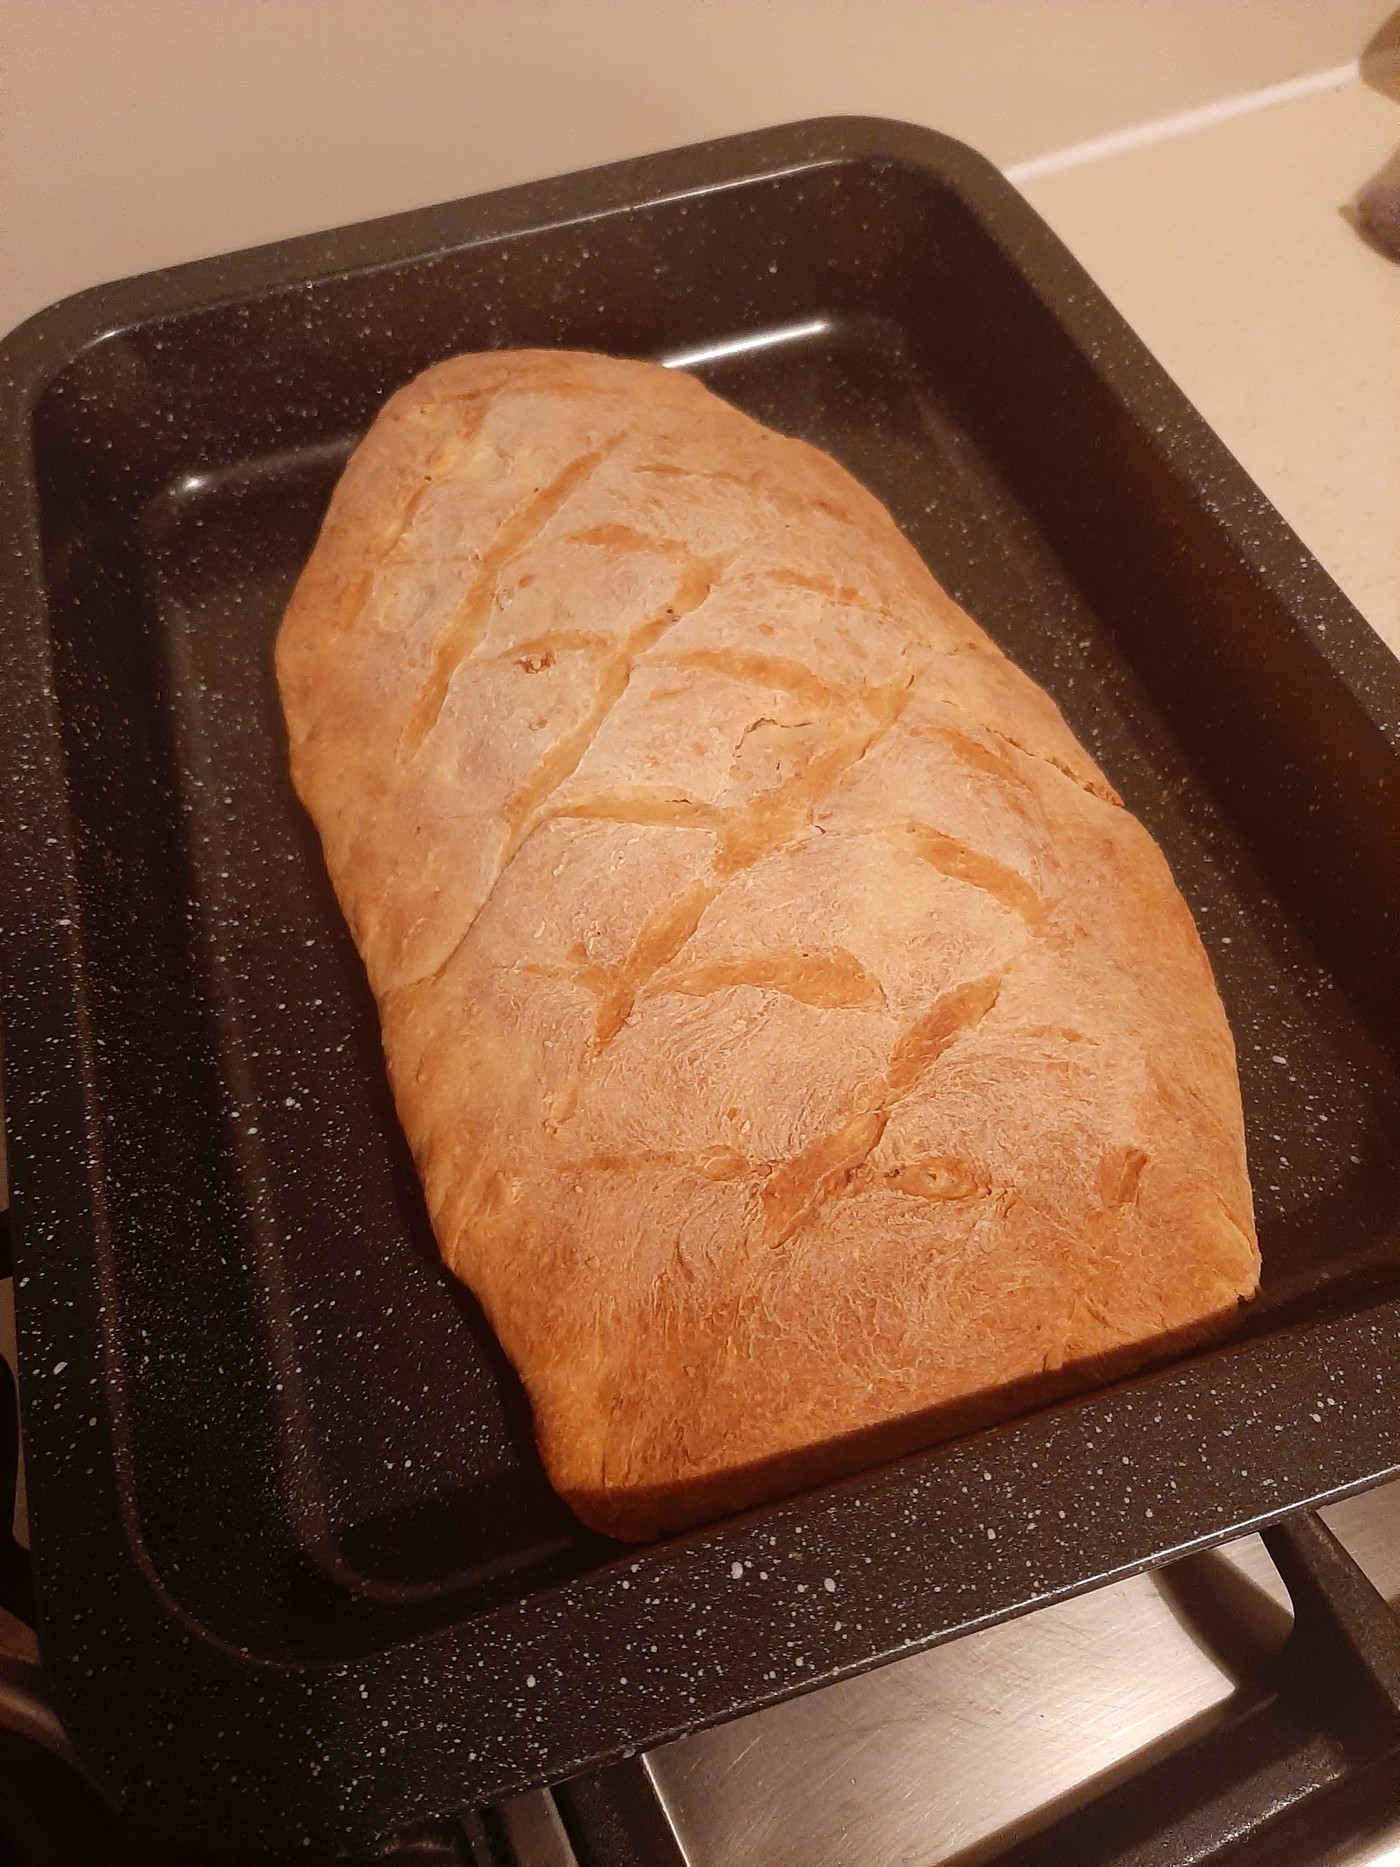 Josh's comforting bake-at-home bread